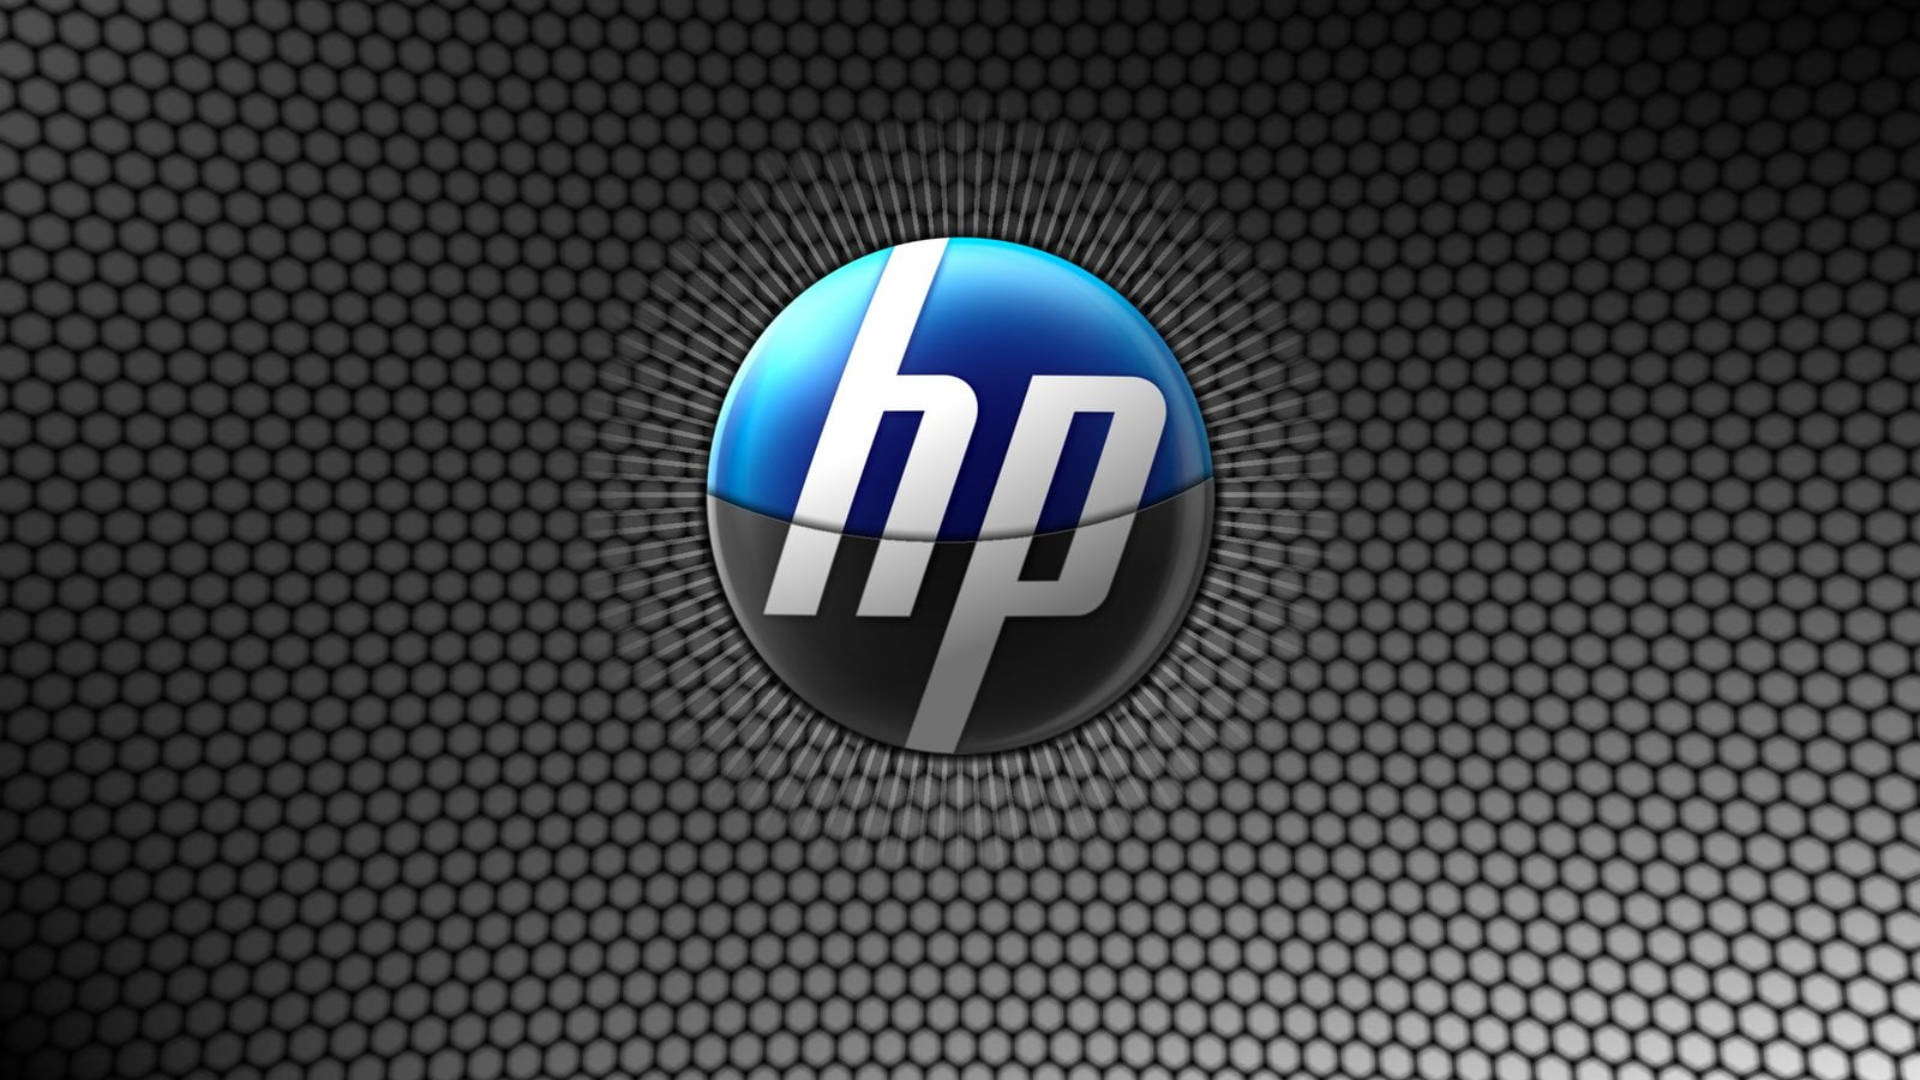 Hp Laptop Logo On Black Honeycomb